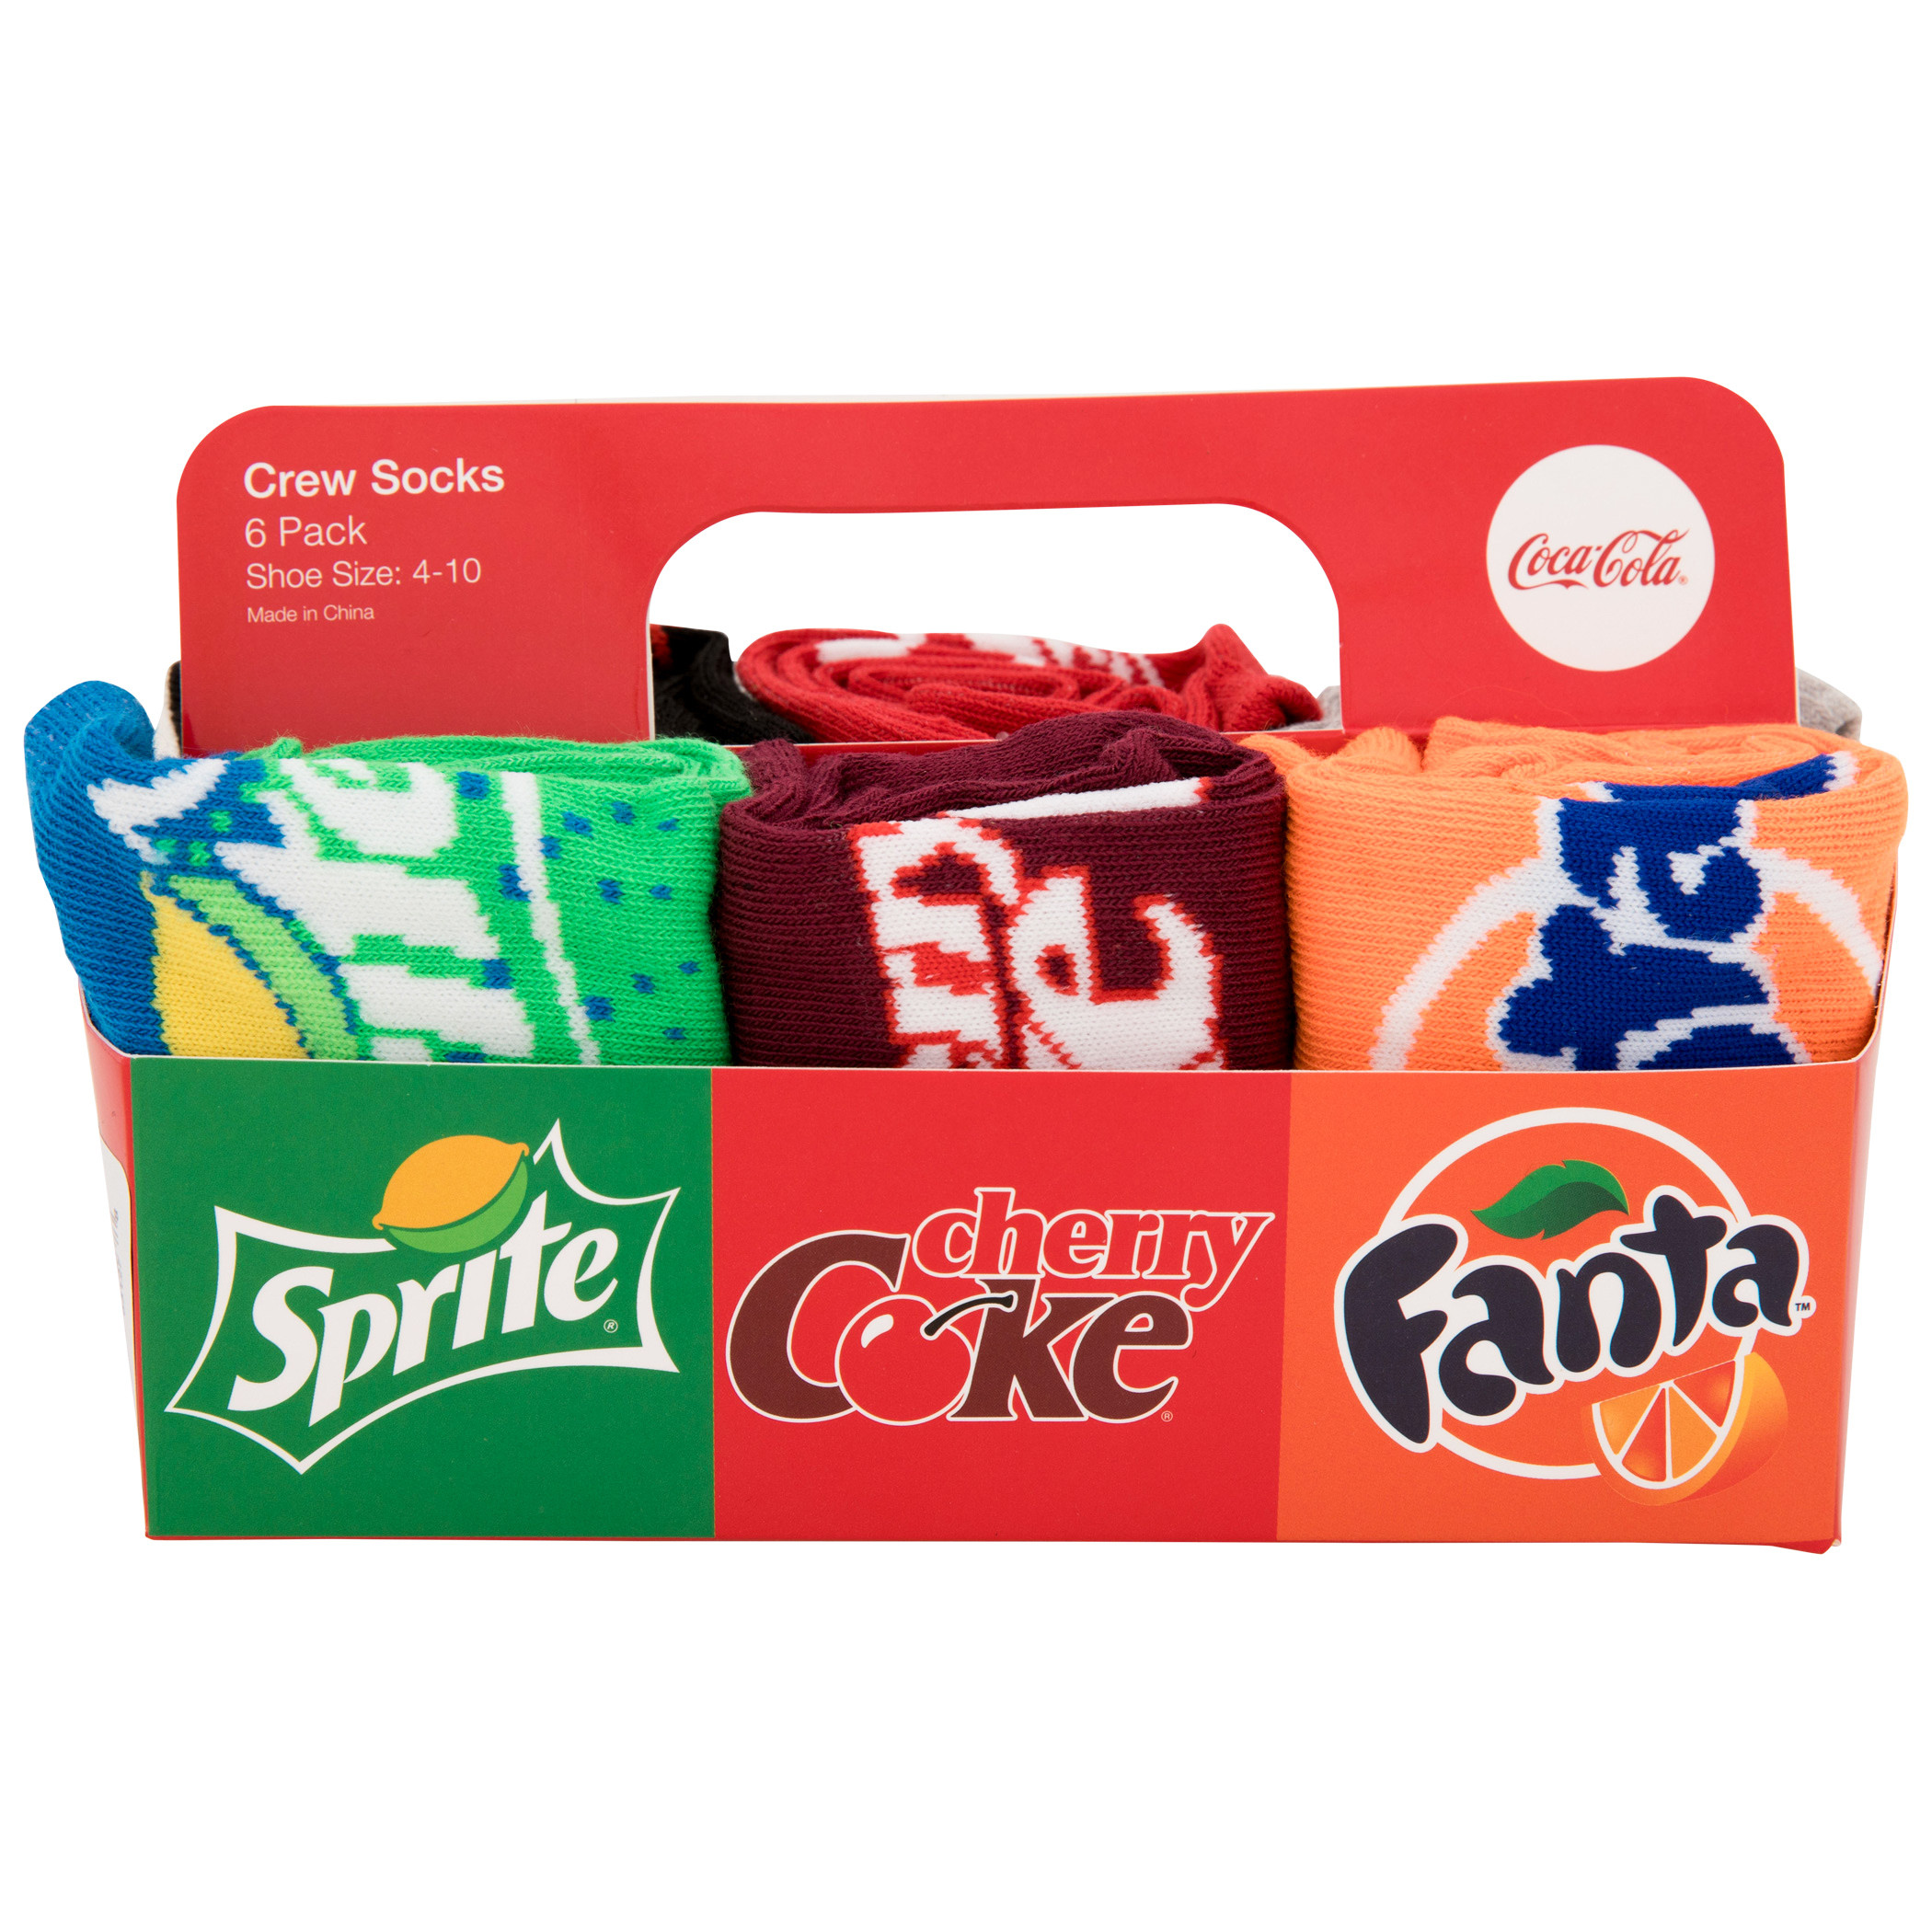 Coca-Cola Soda Brands Crew Socks 6-Pack in Novelty Packaging